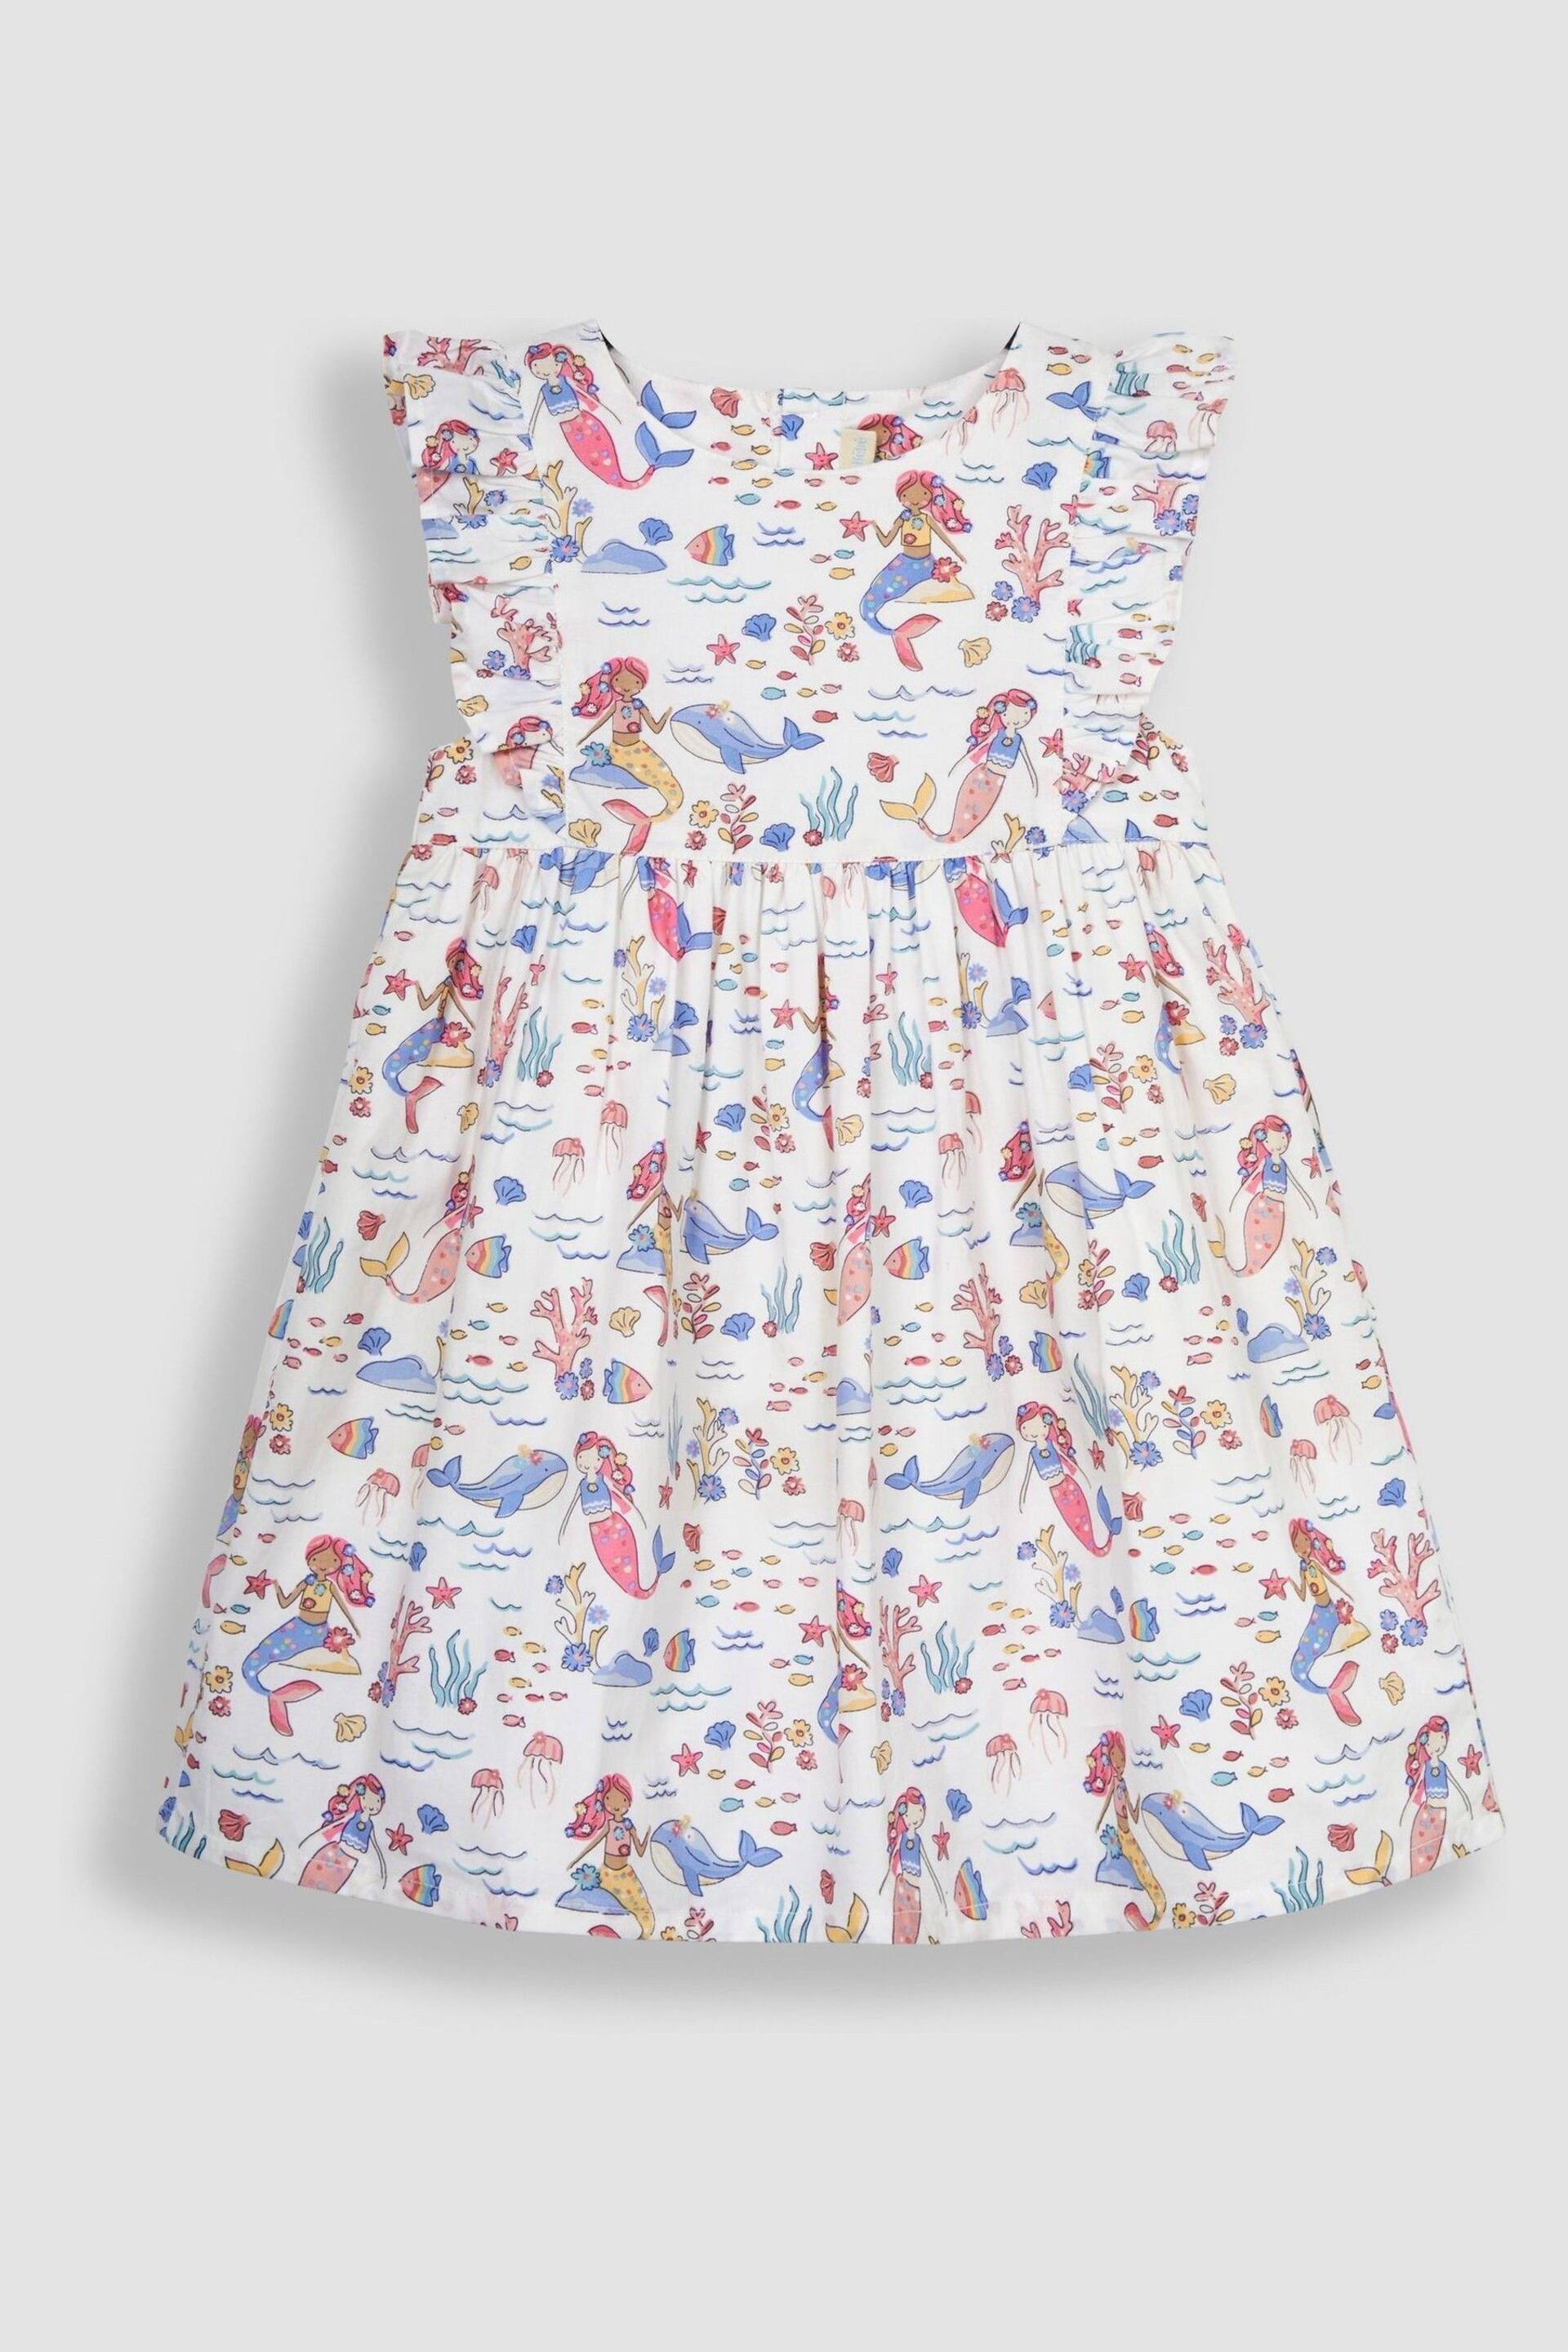 JoJo Maman Bébé Blue Mermaid & Friends Pretty Summer Dress - Image 2 of 4